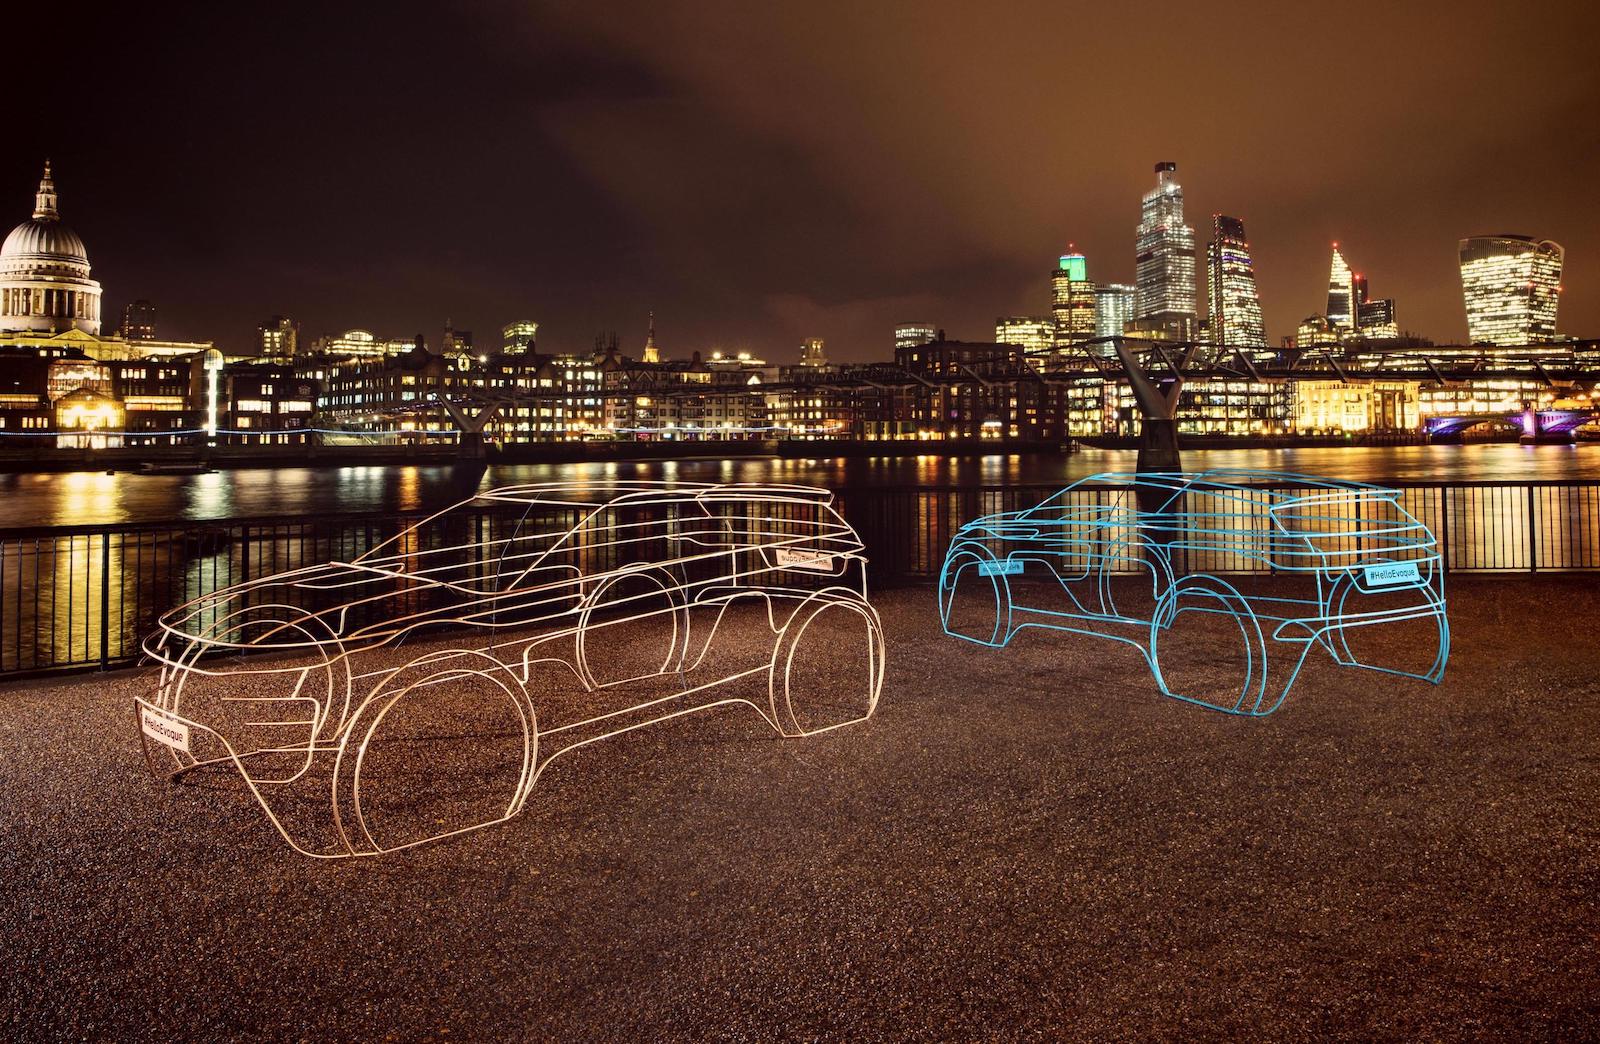 2020 Range Rover Evoque previewed with art sculptures